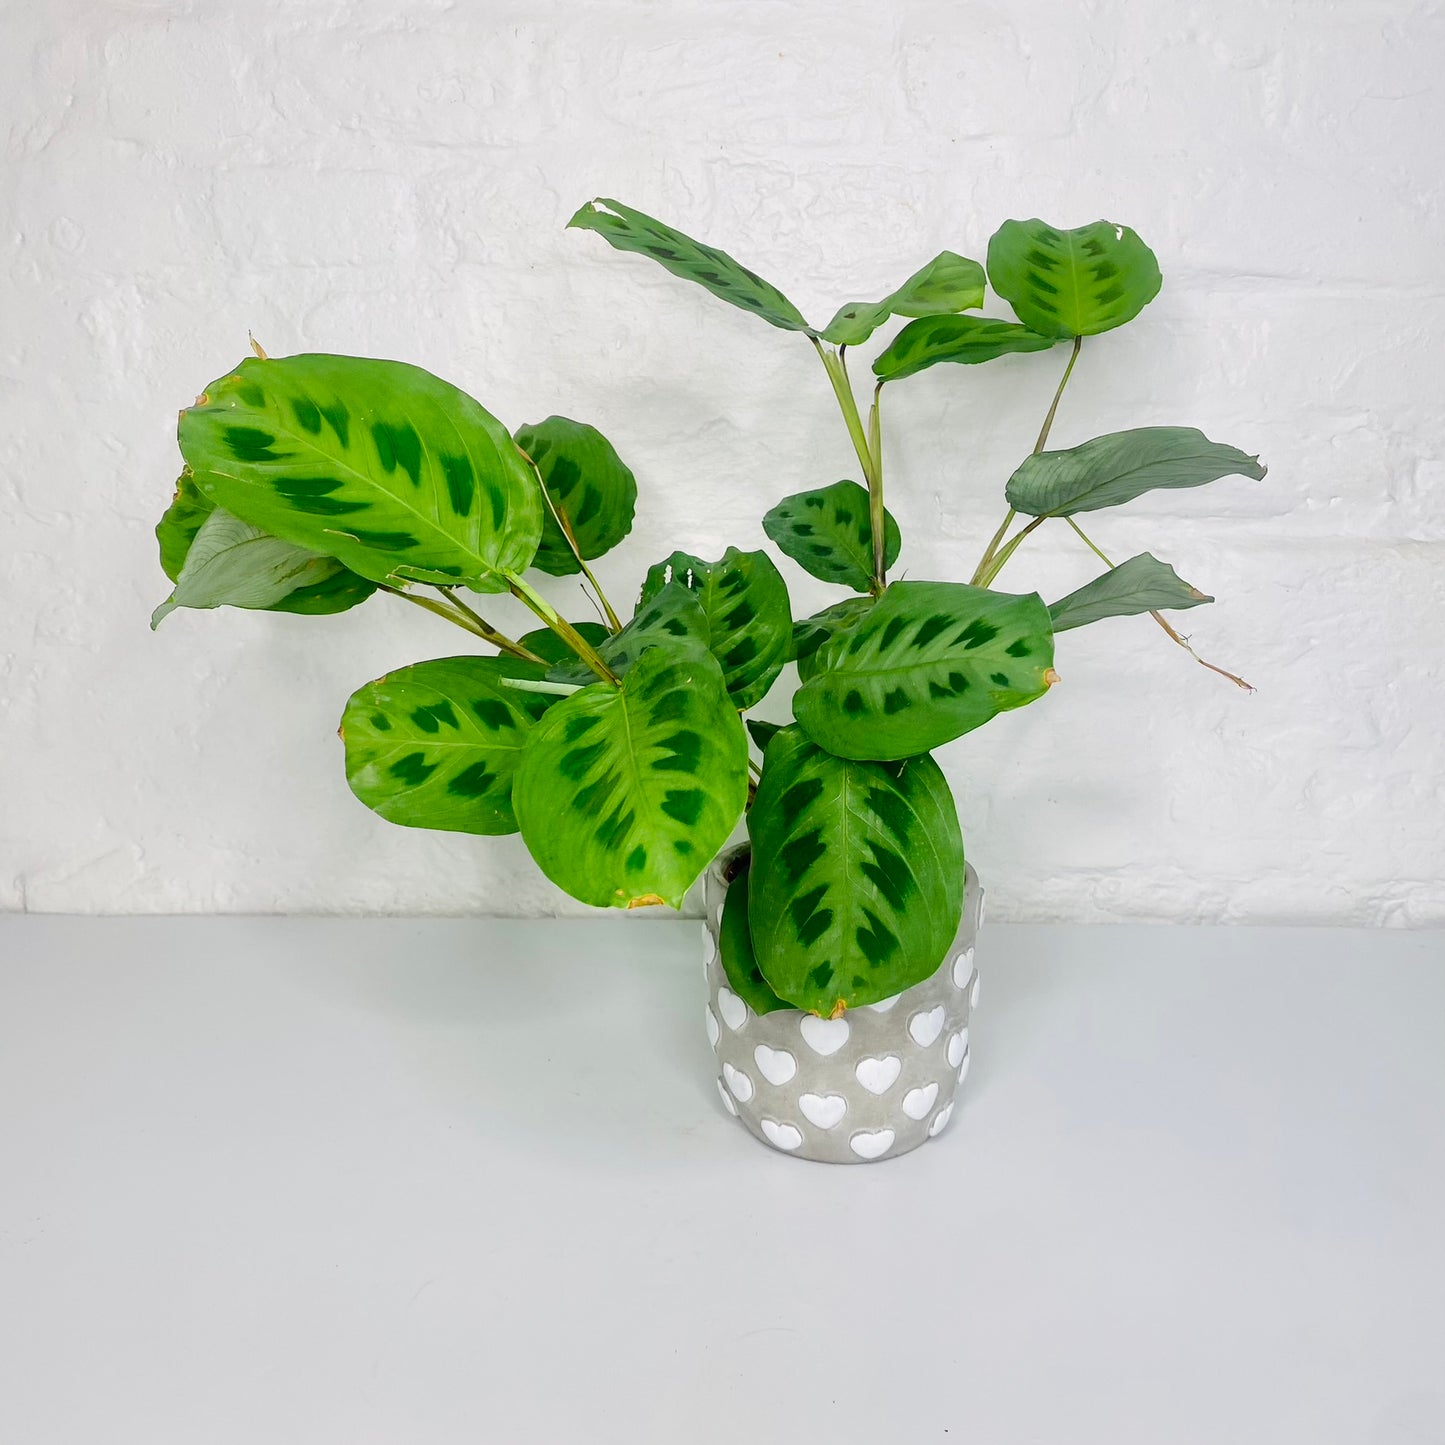 Maranta Plant | Prayer Plant | House Plant | Nature's Living Artistry for Your Home